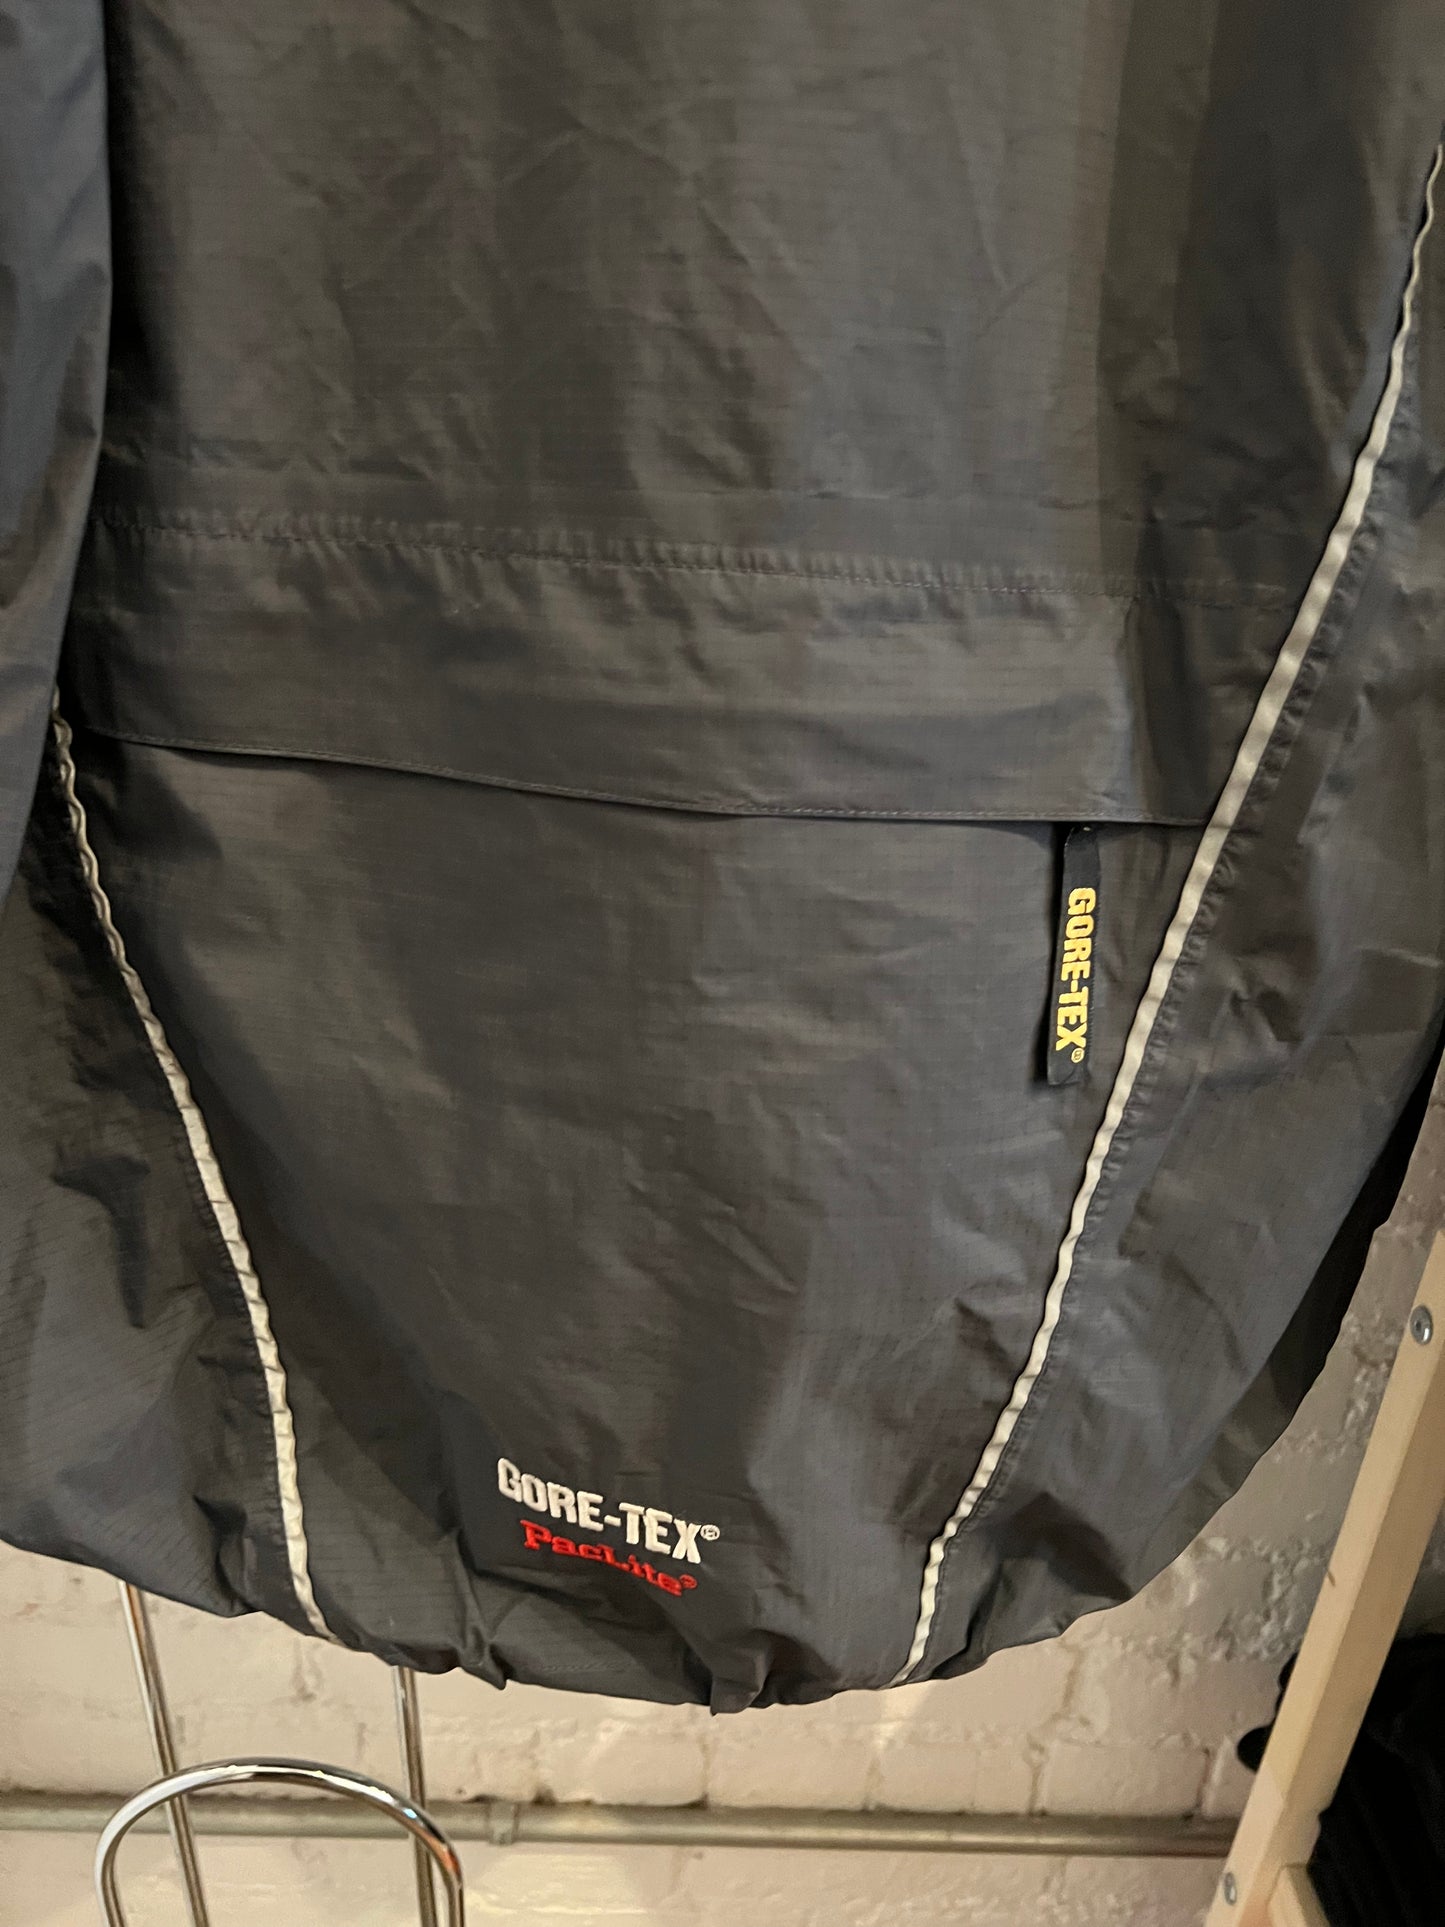 Gore-Tex Gore Bike Wear Packable Jacket size L